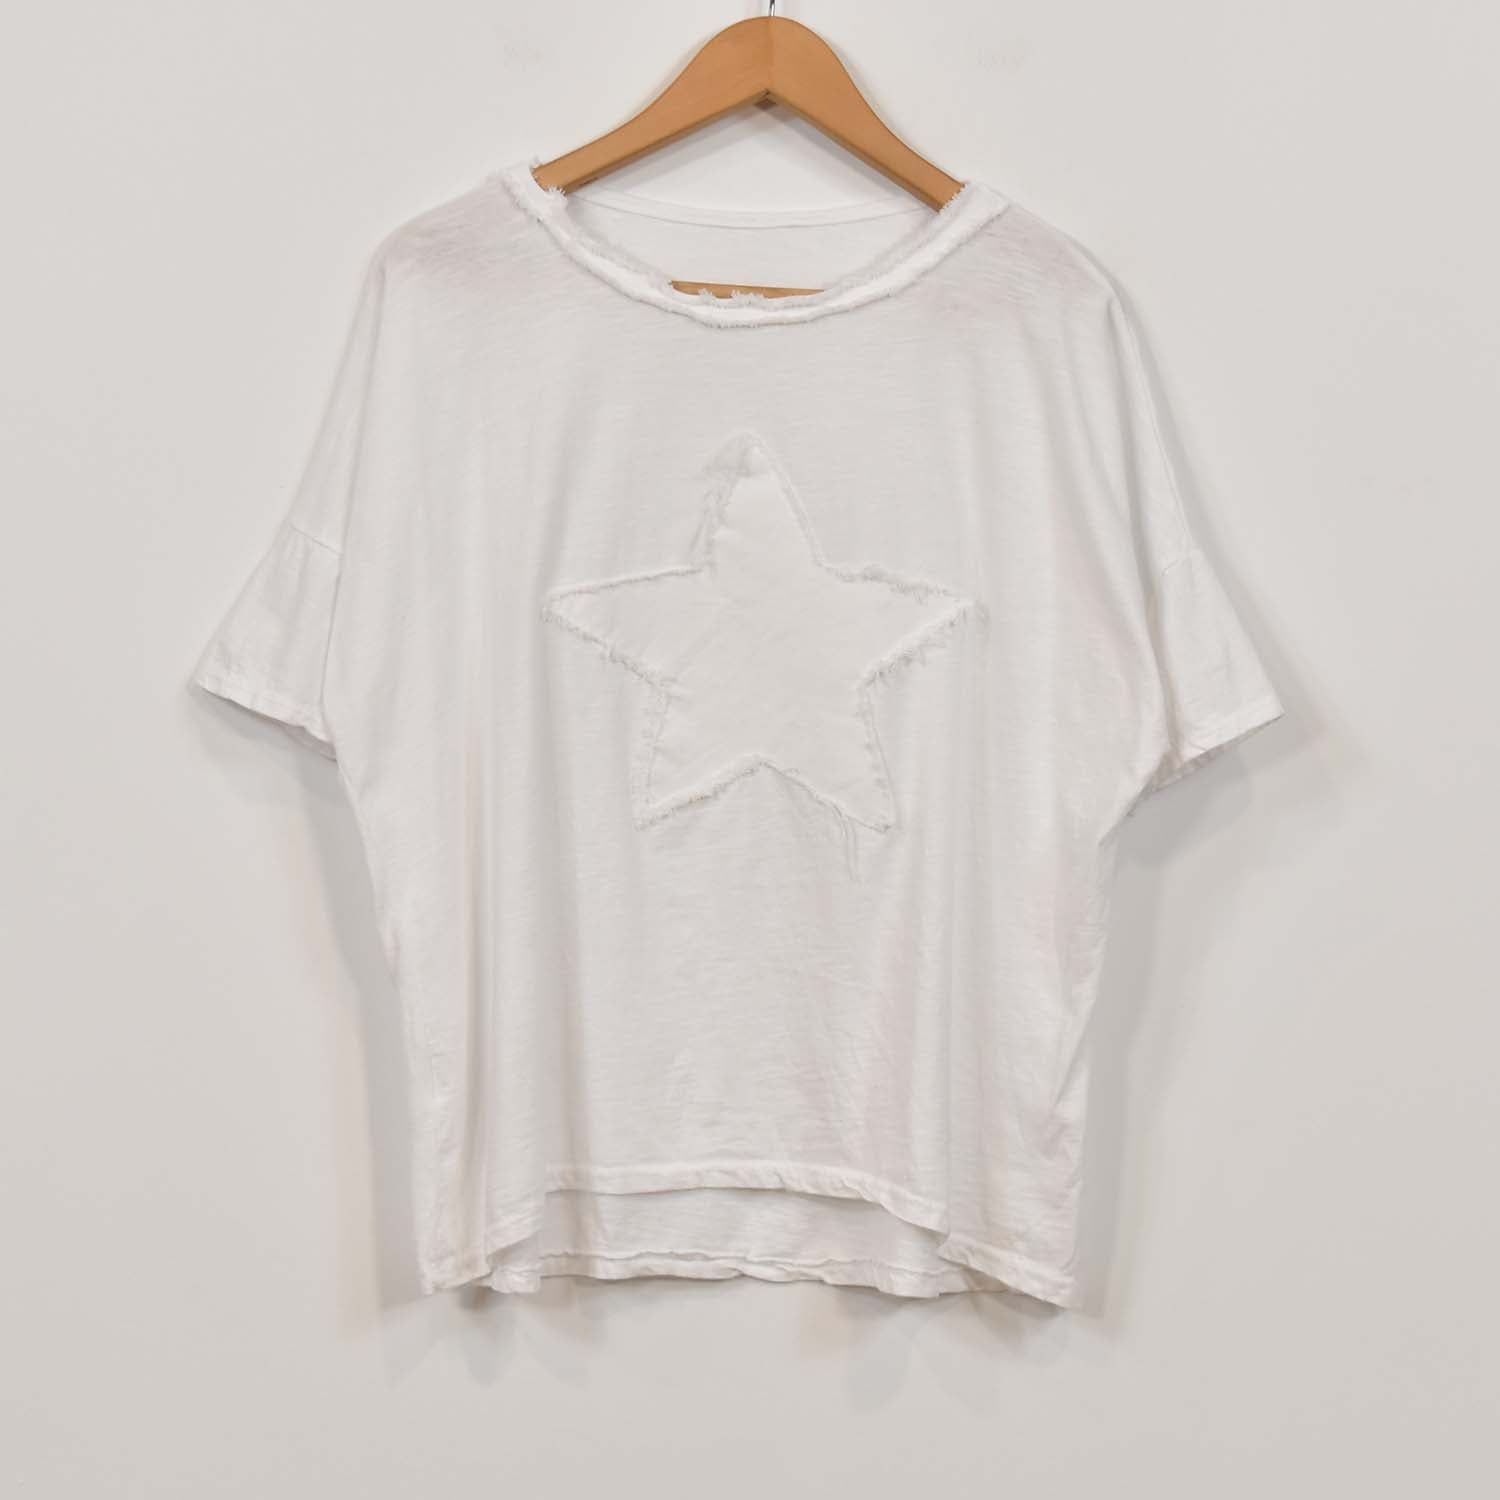 White fringed star t-shirt